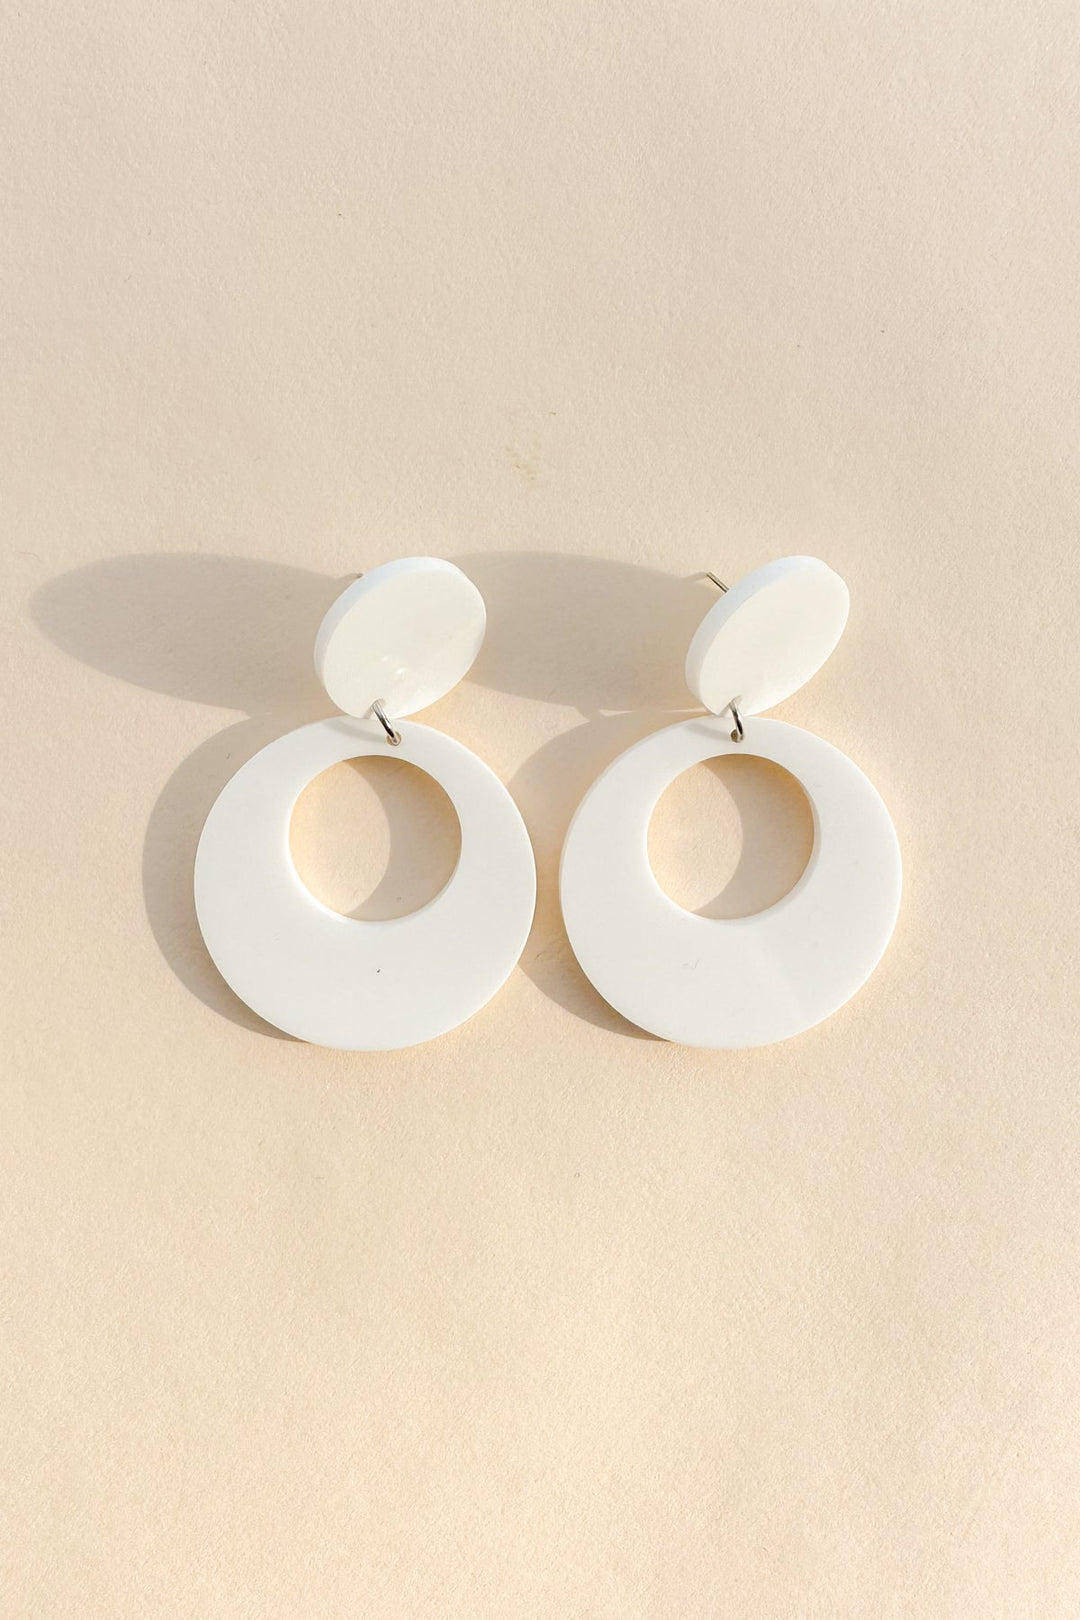 Mod Round Earrings in White